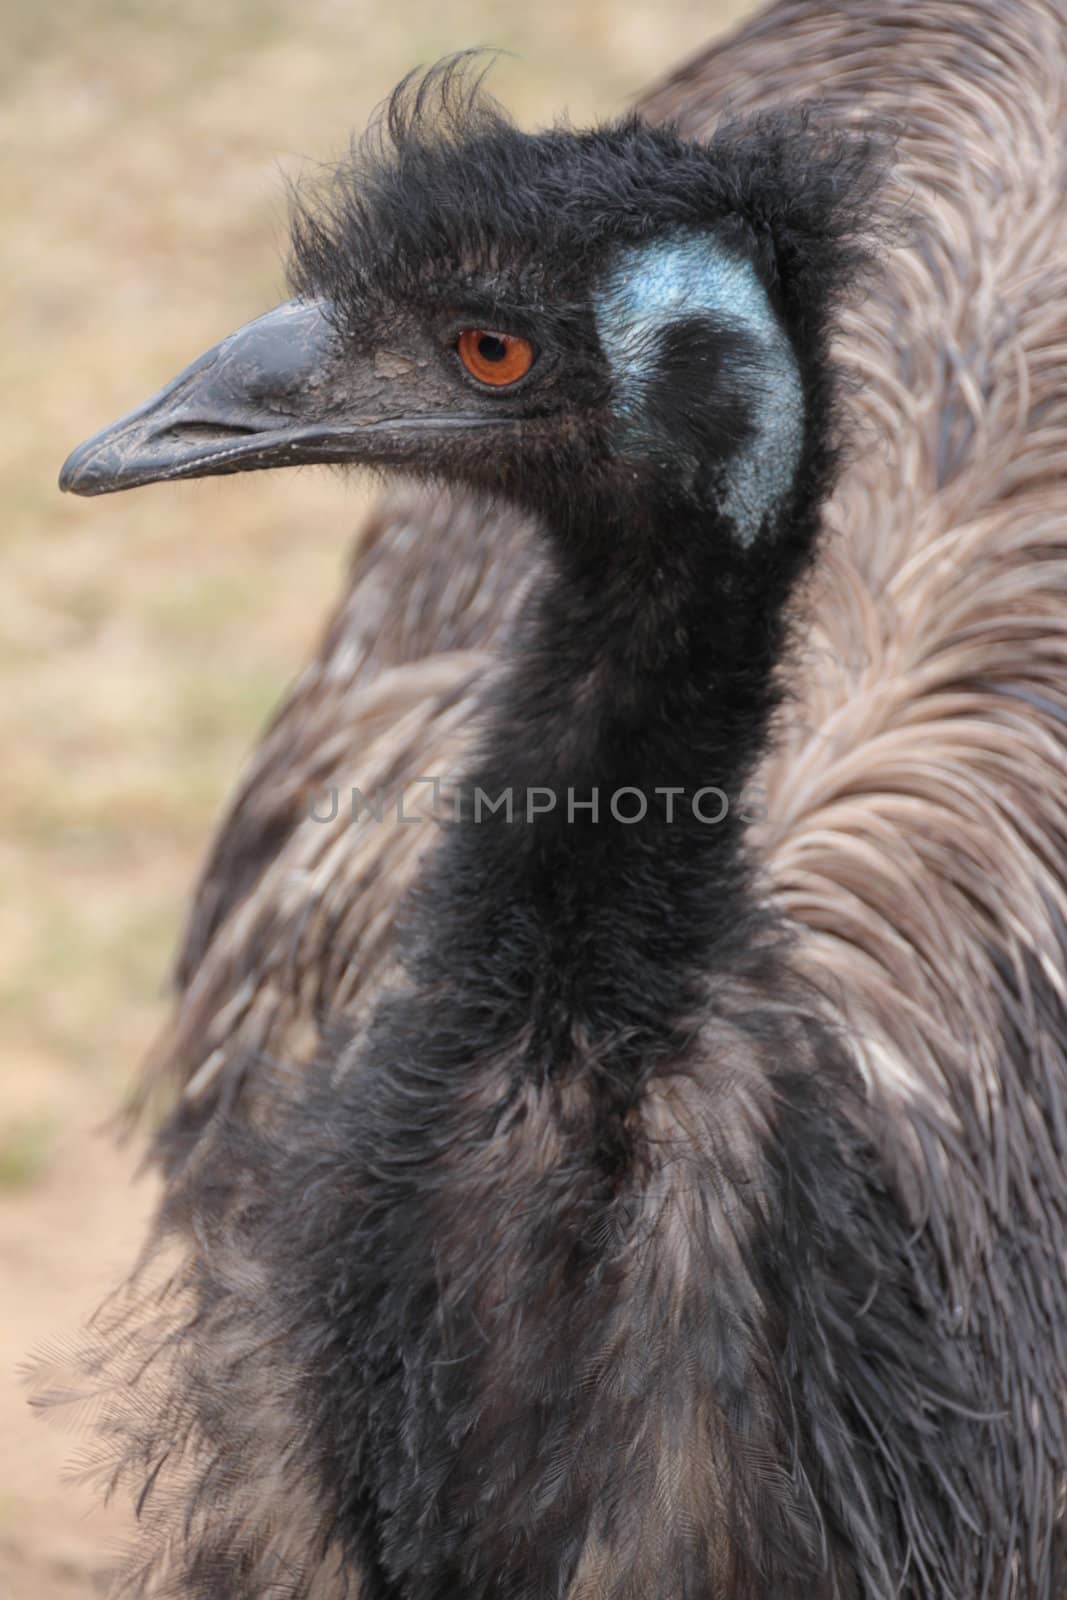 Profile head shot of an Australian Emu